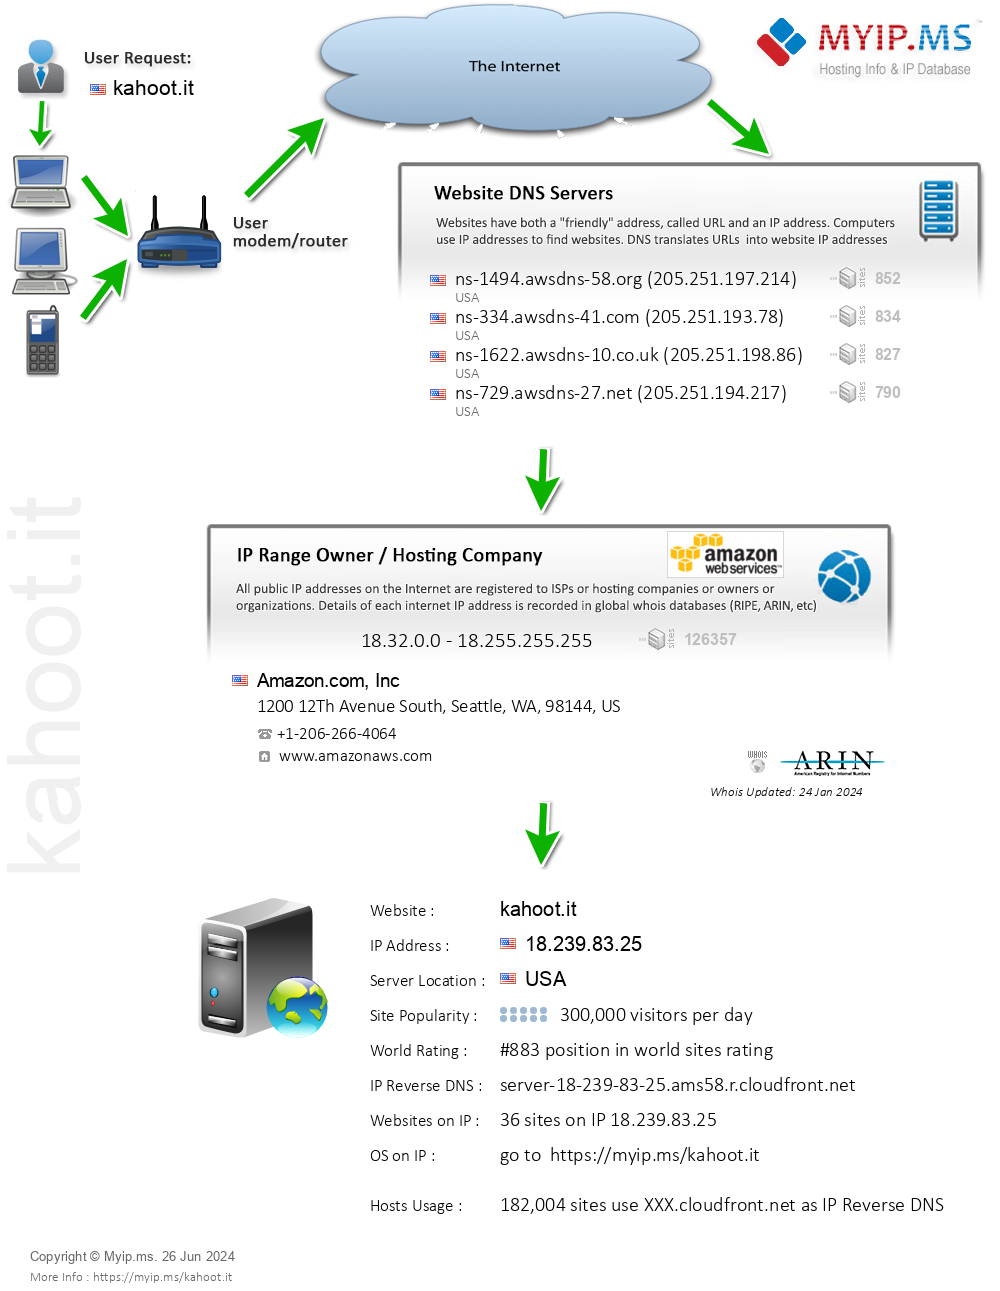 Kahoot.it - Website Hosting Visual IP Diagram